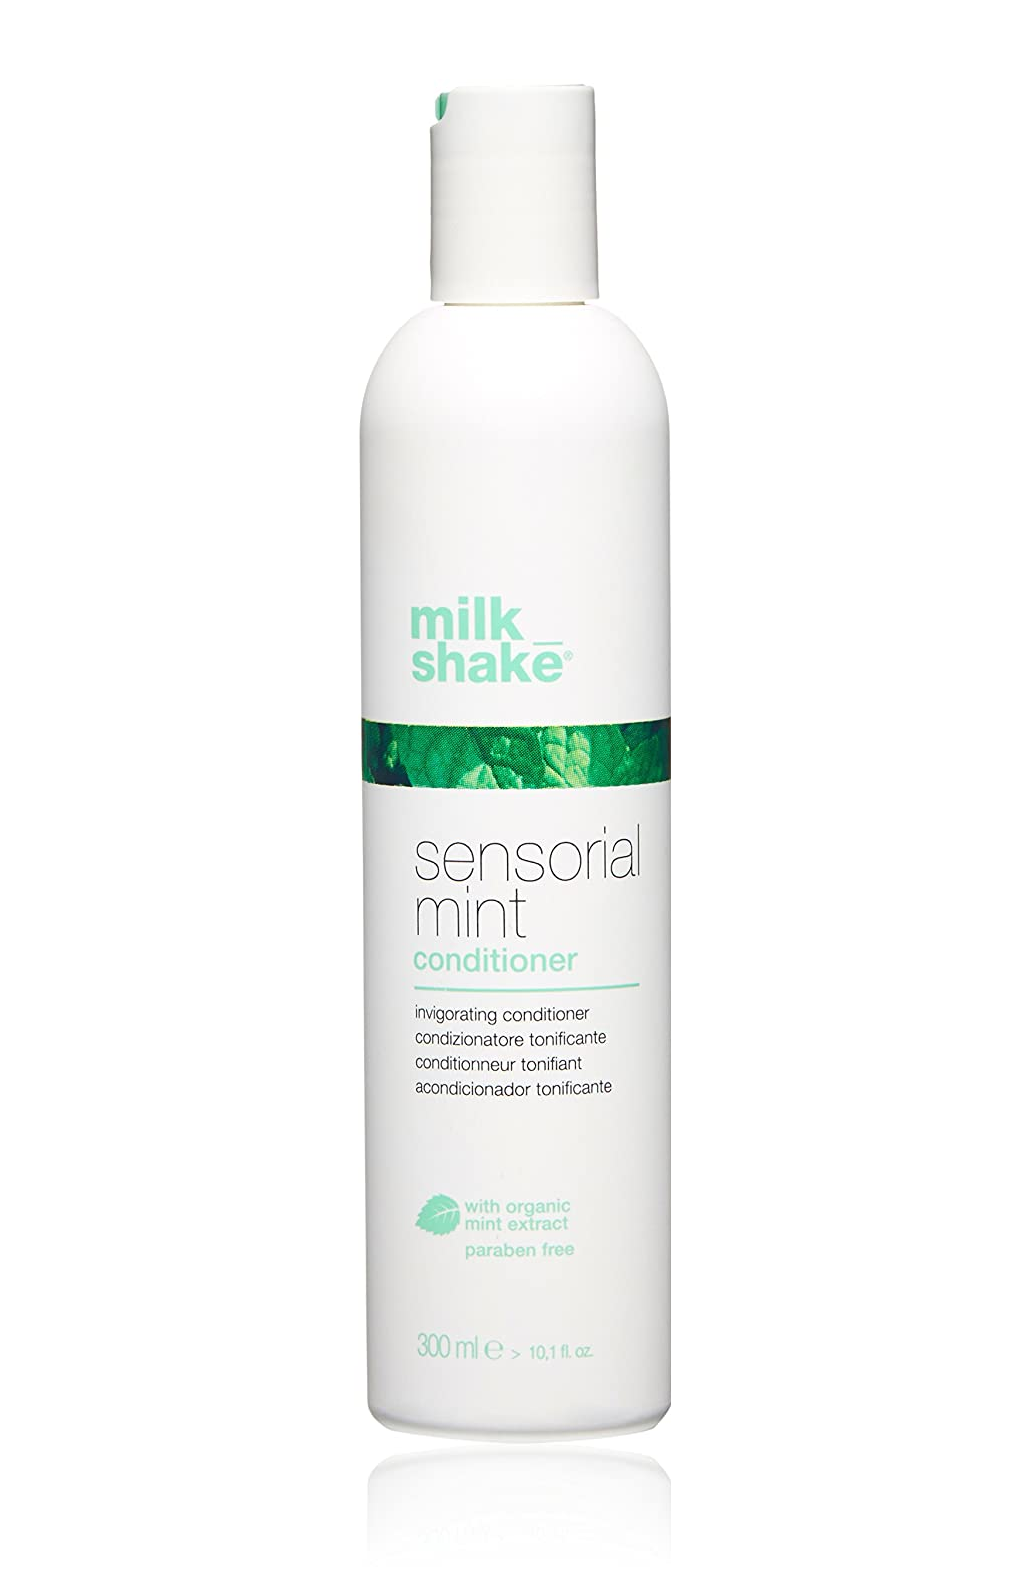 milk_shake sensorial mint conditioner, 10.1 Oz. - $23.00